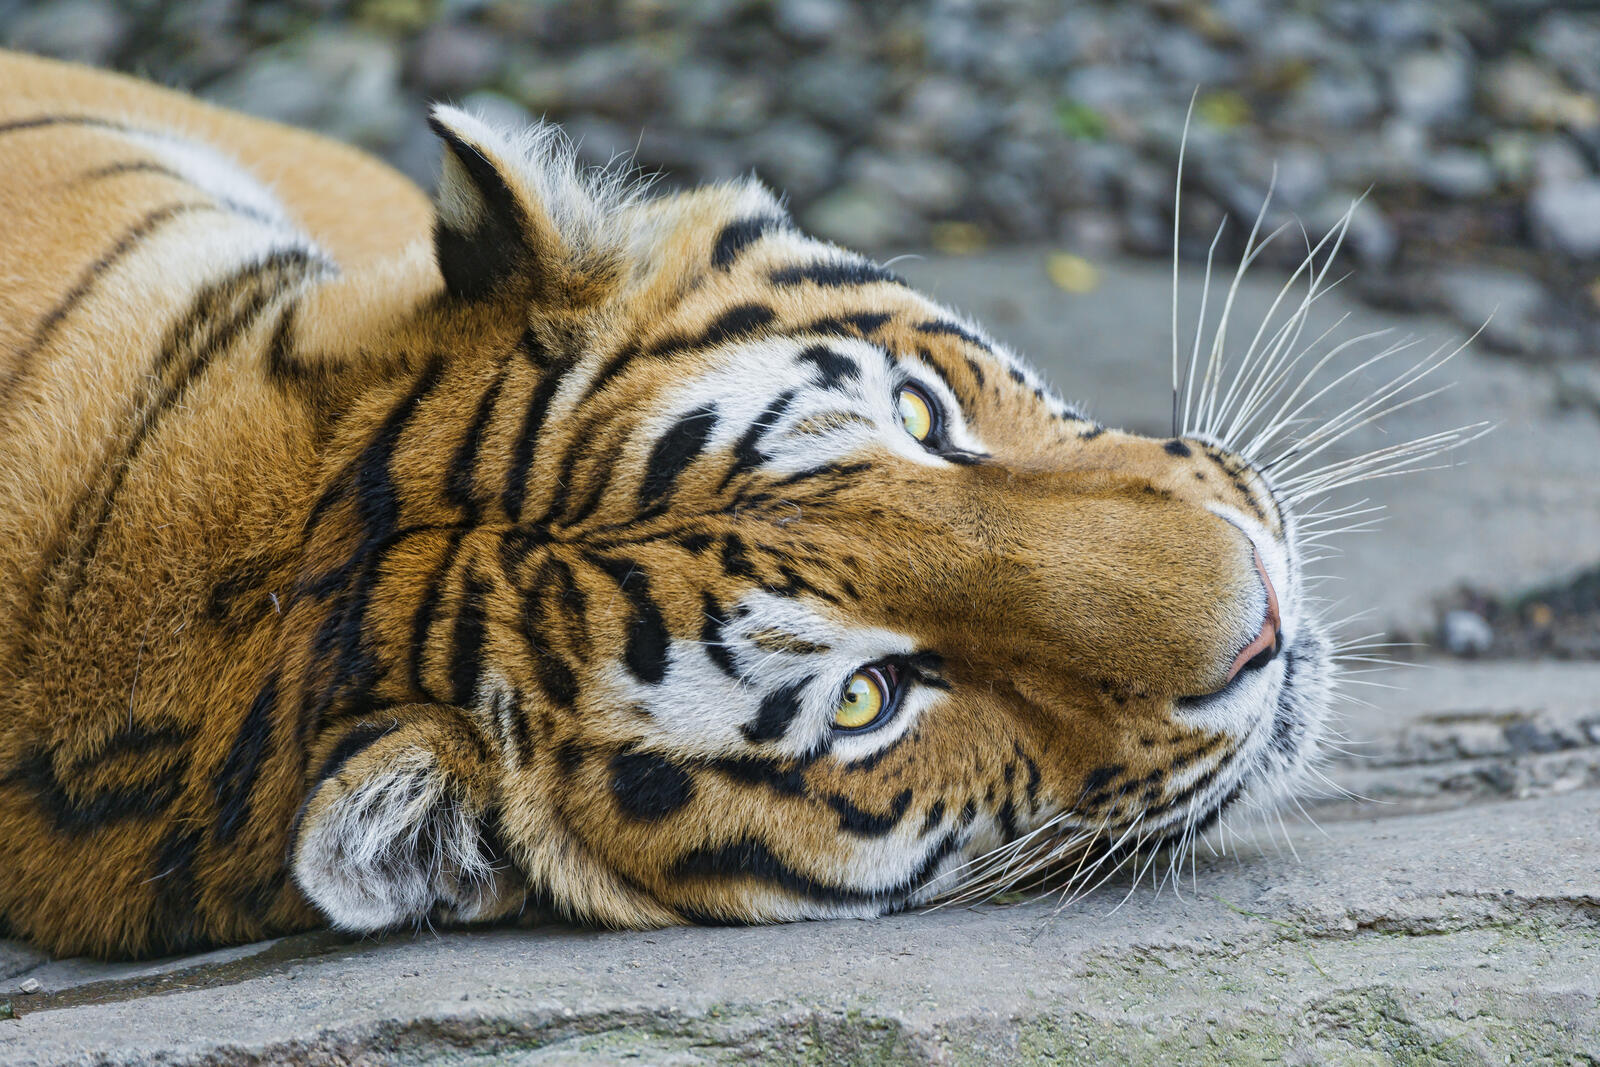 Wallpapers view tiger tigers predator on the desktop